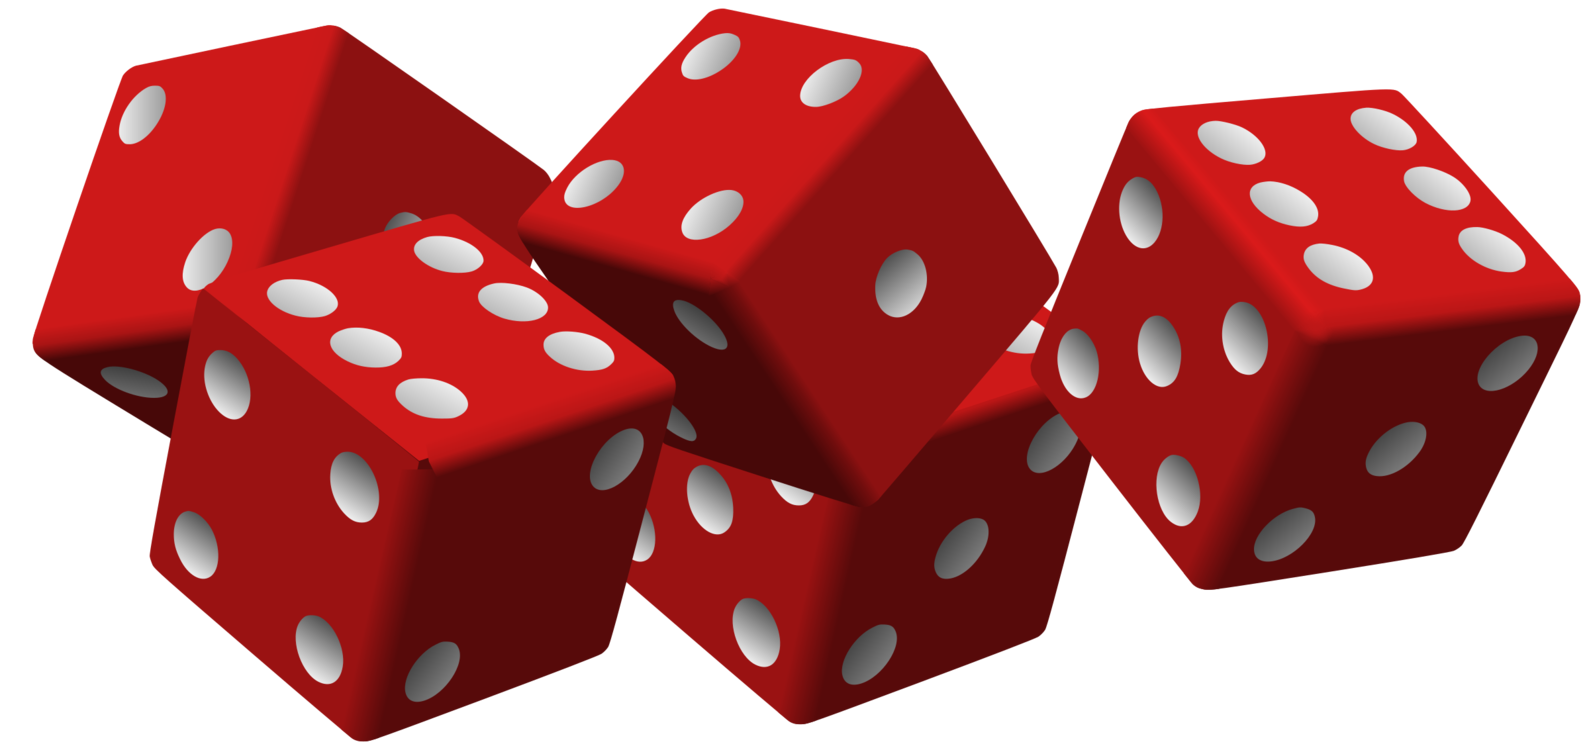 kisscc0-casino-dice-gambling-craps-board